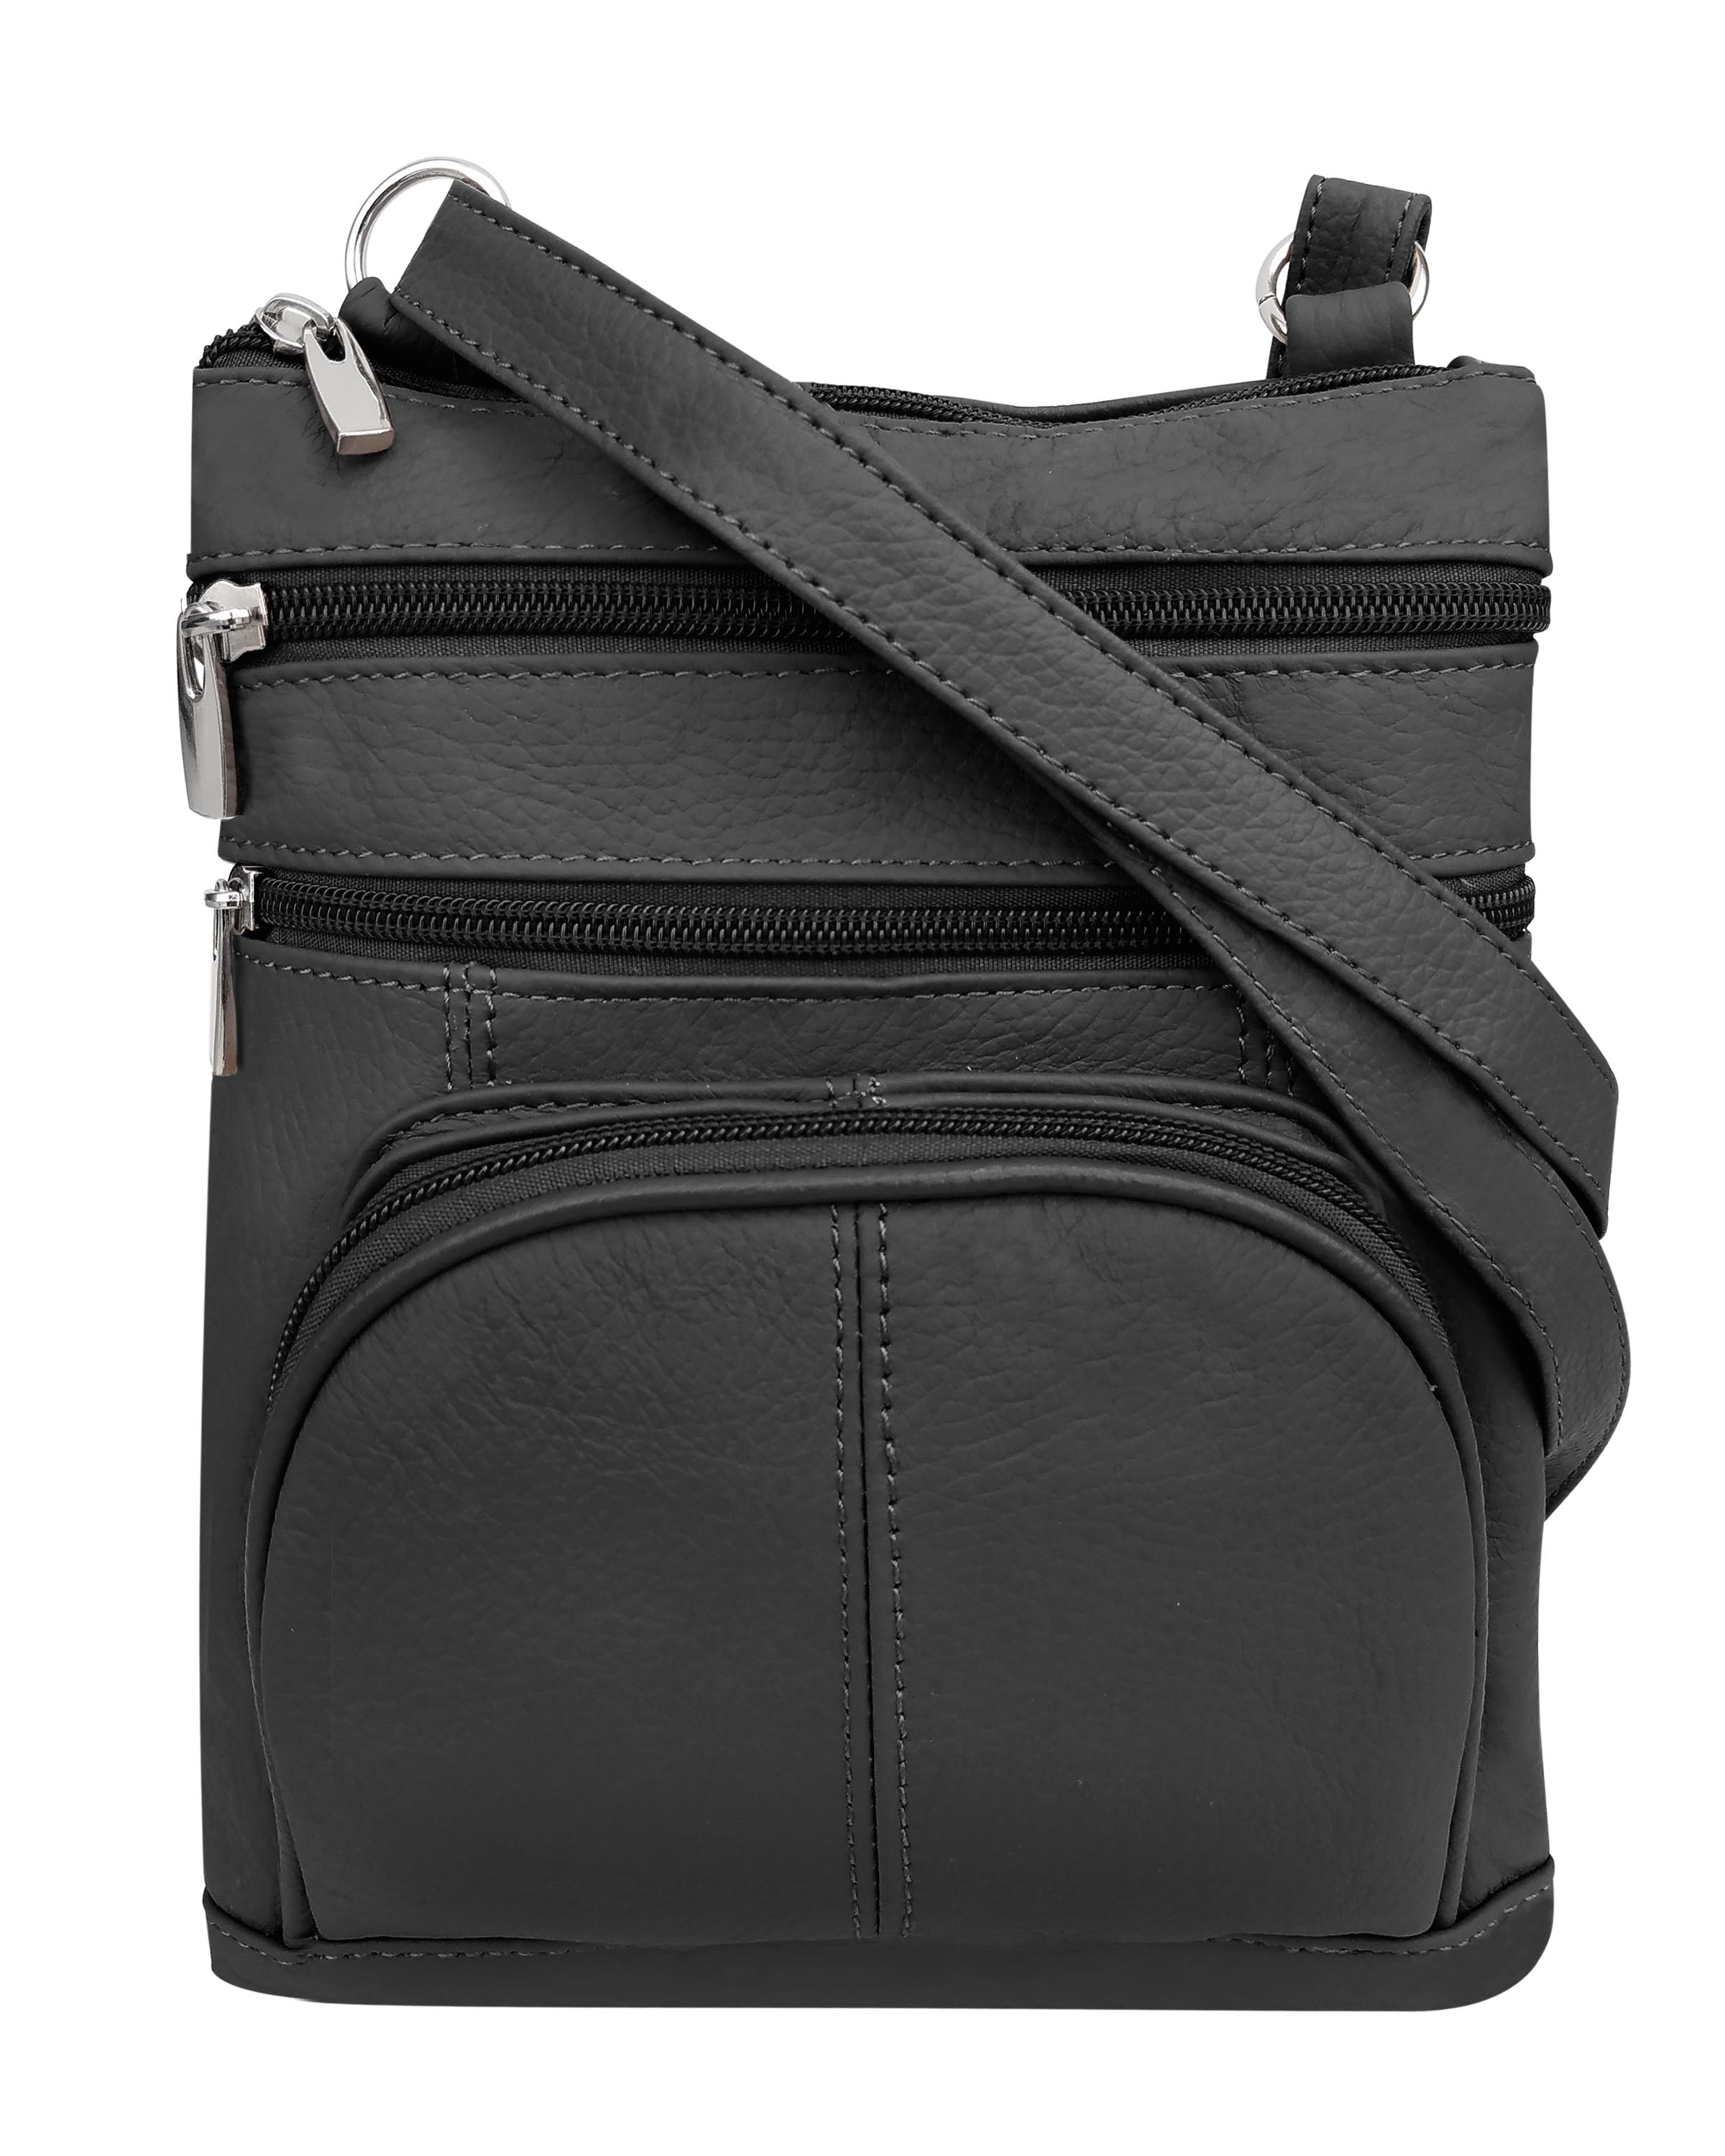 The Best Crossbody Bags for Women 2023 - Summer Crossbody Bag